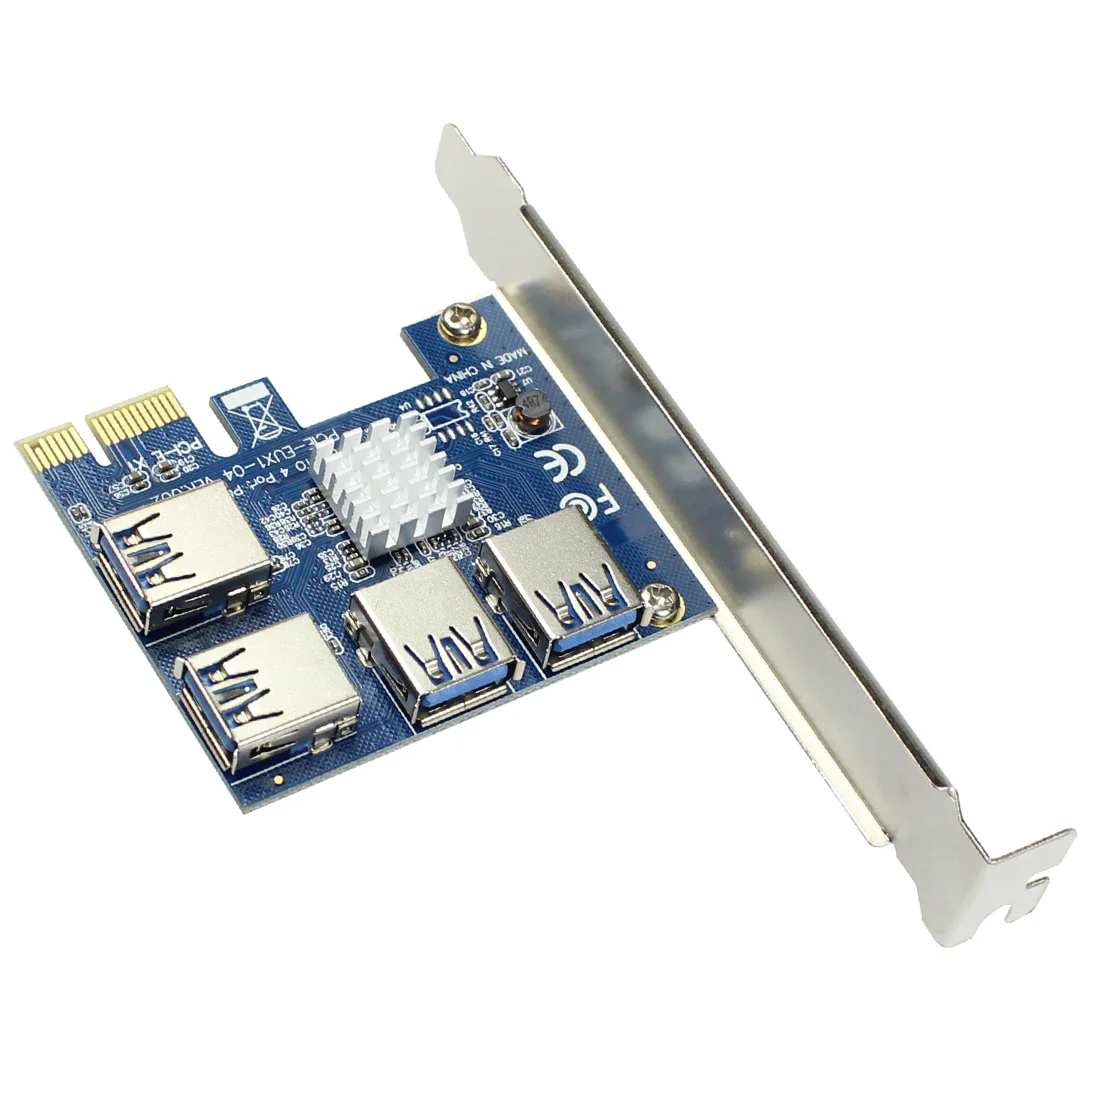 60 см PCIe от 1 до 4 16X Riser Card PCI E 1X USB Adapter Port Multiplier для BTC Bitcoin Miner Mining|Платы расширения| |